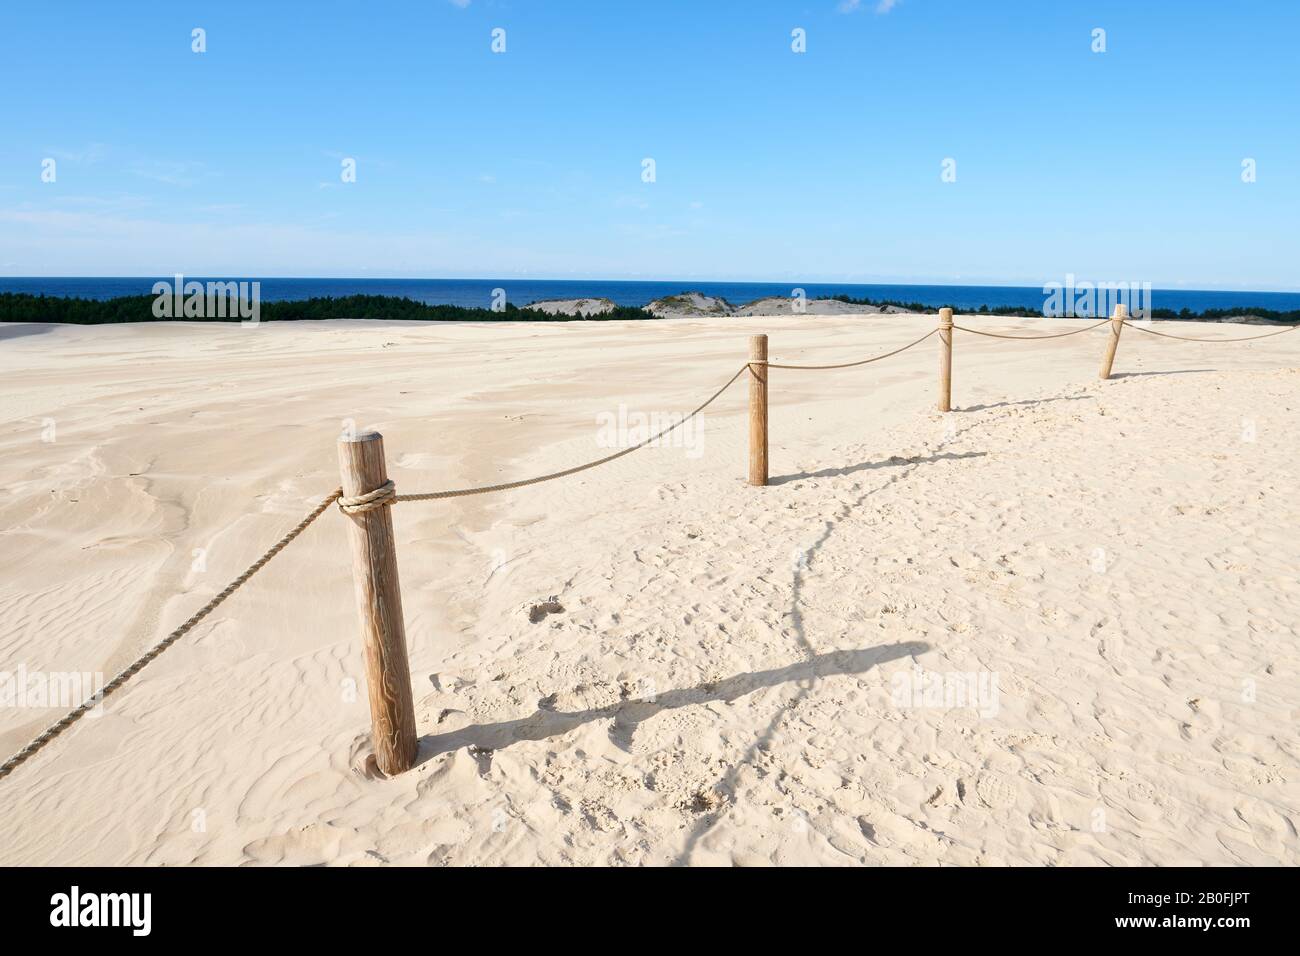 Slovinski national park, Leba sand dune on the Baltic coast Stock Photo